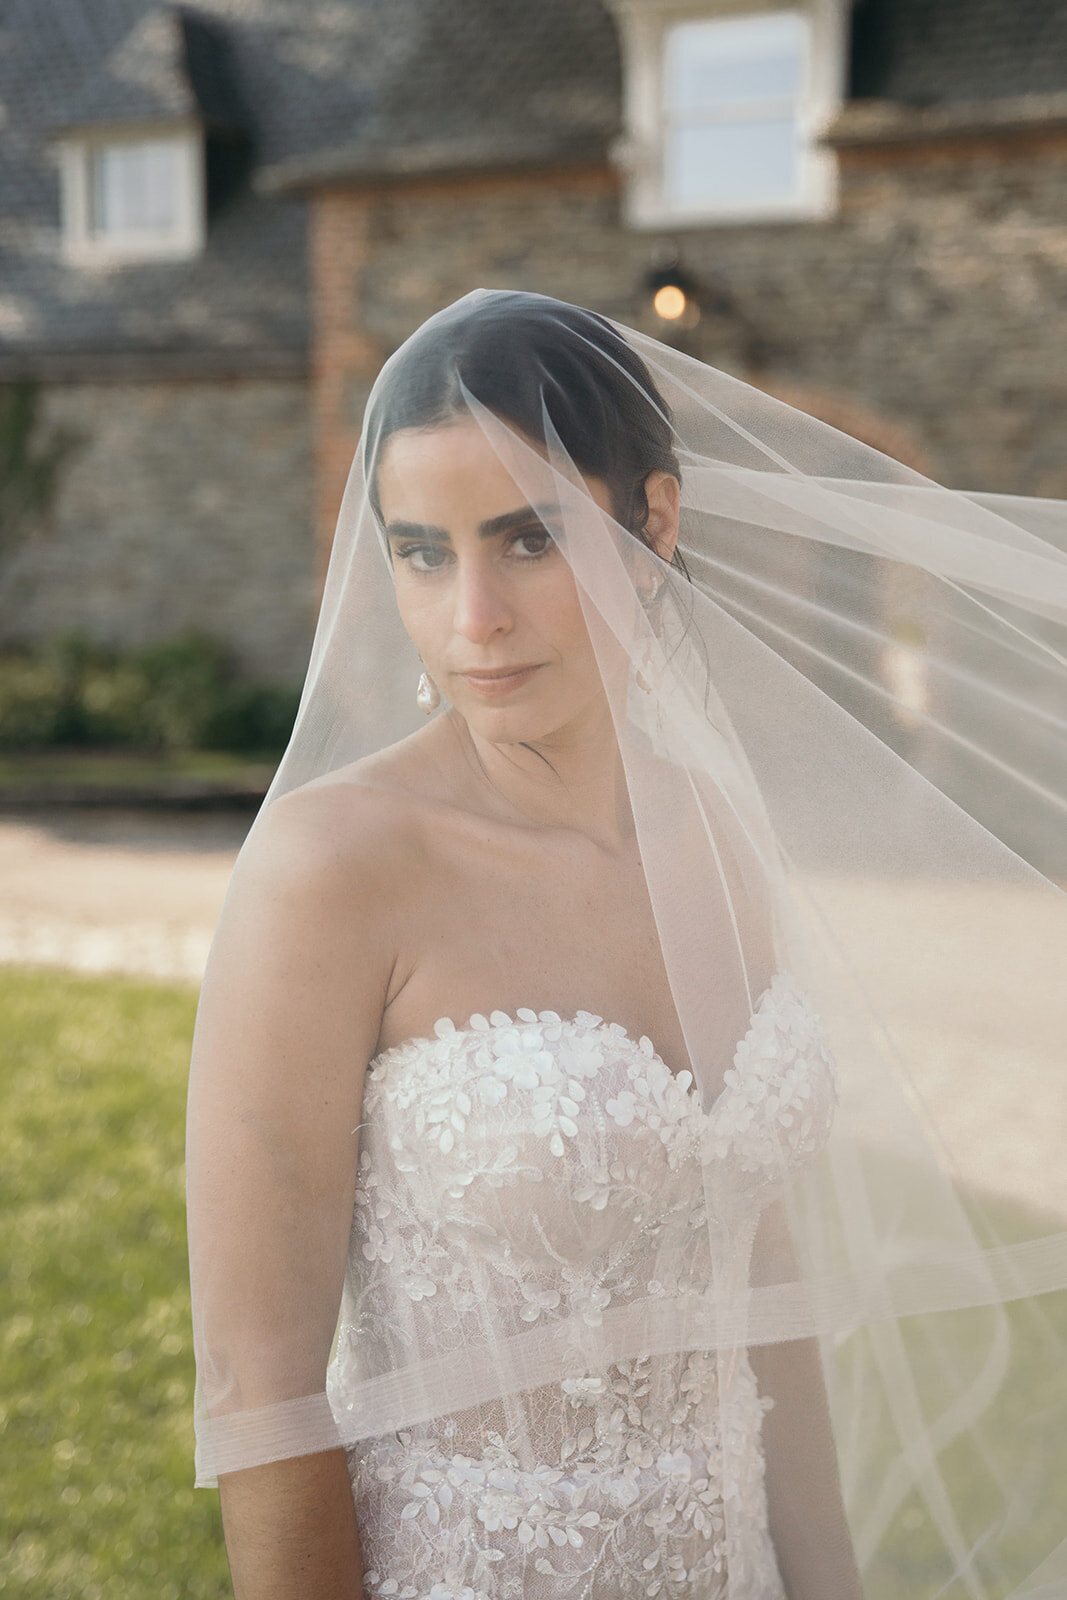 Shepherds-Run-RI-Newport-South-Kingstown-veil-wedding-Erica-Renee-Beauty-bride-natural-wedding-hair-makeup-clean-artist-stylist